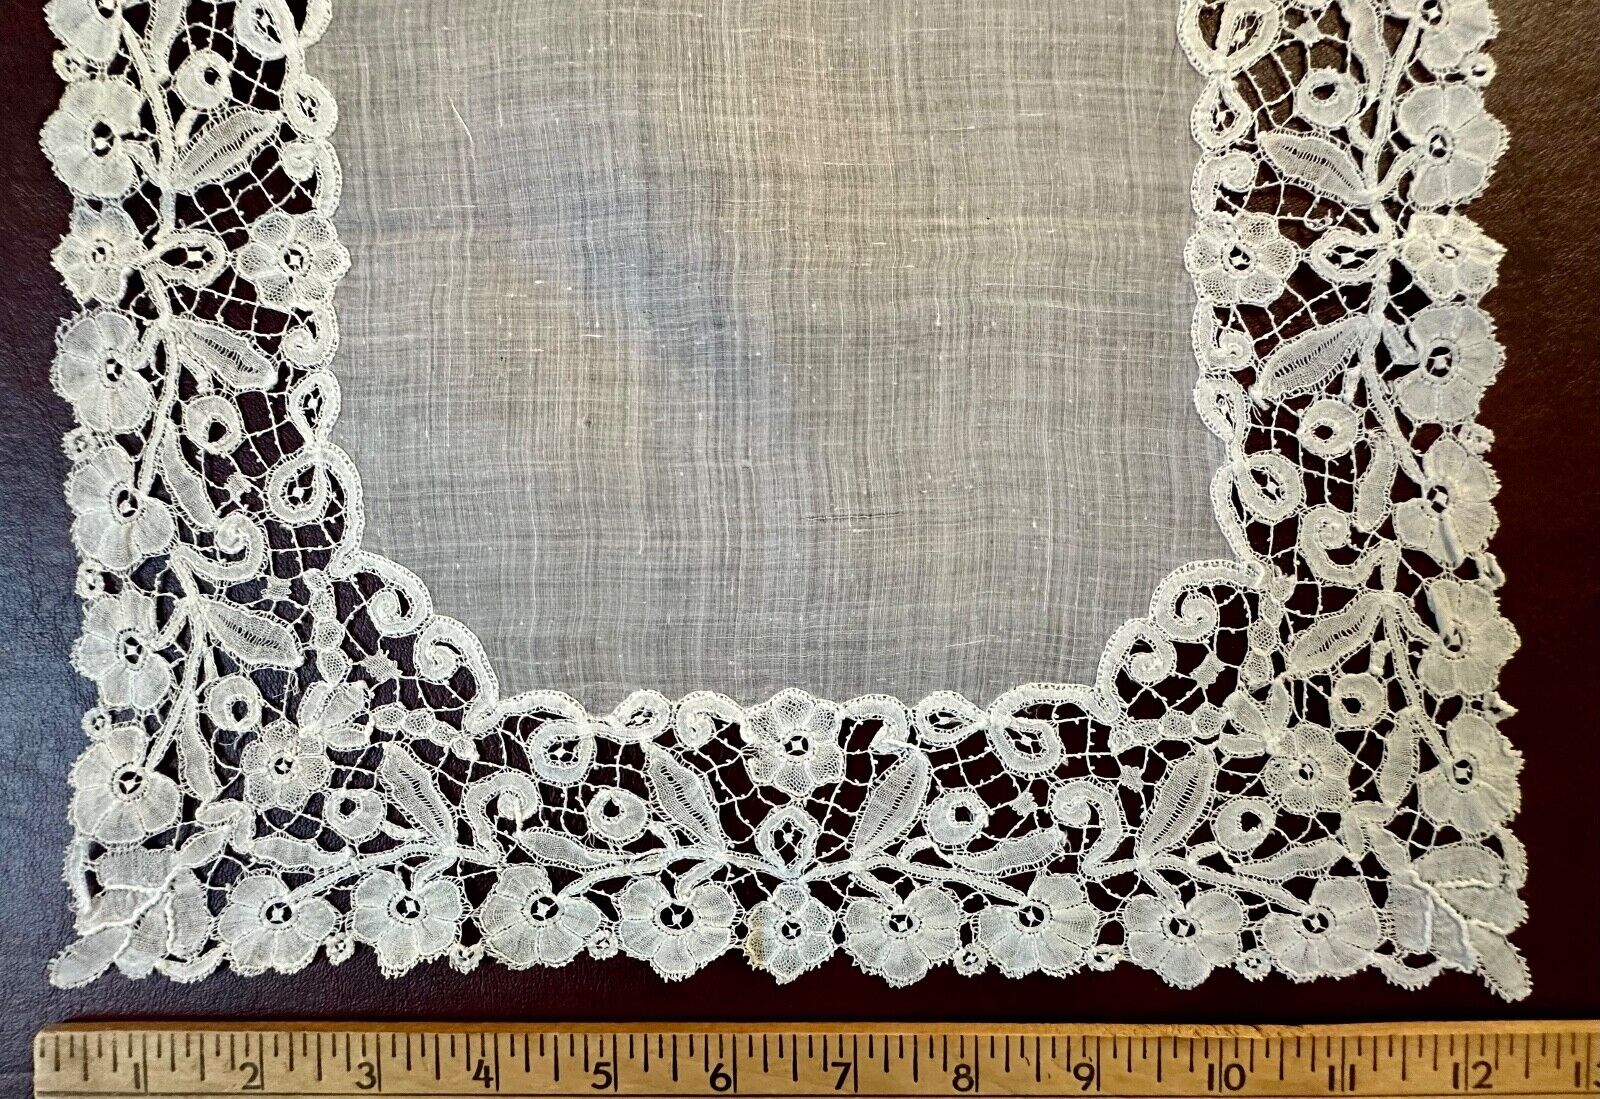 Bruges Belgian bobbin lace edged handkerchief Late 19th C.